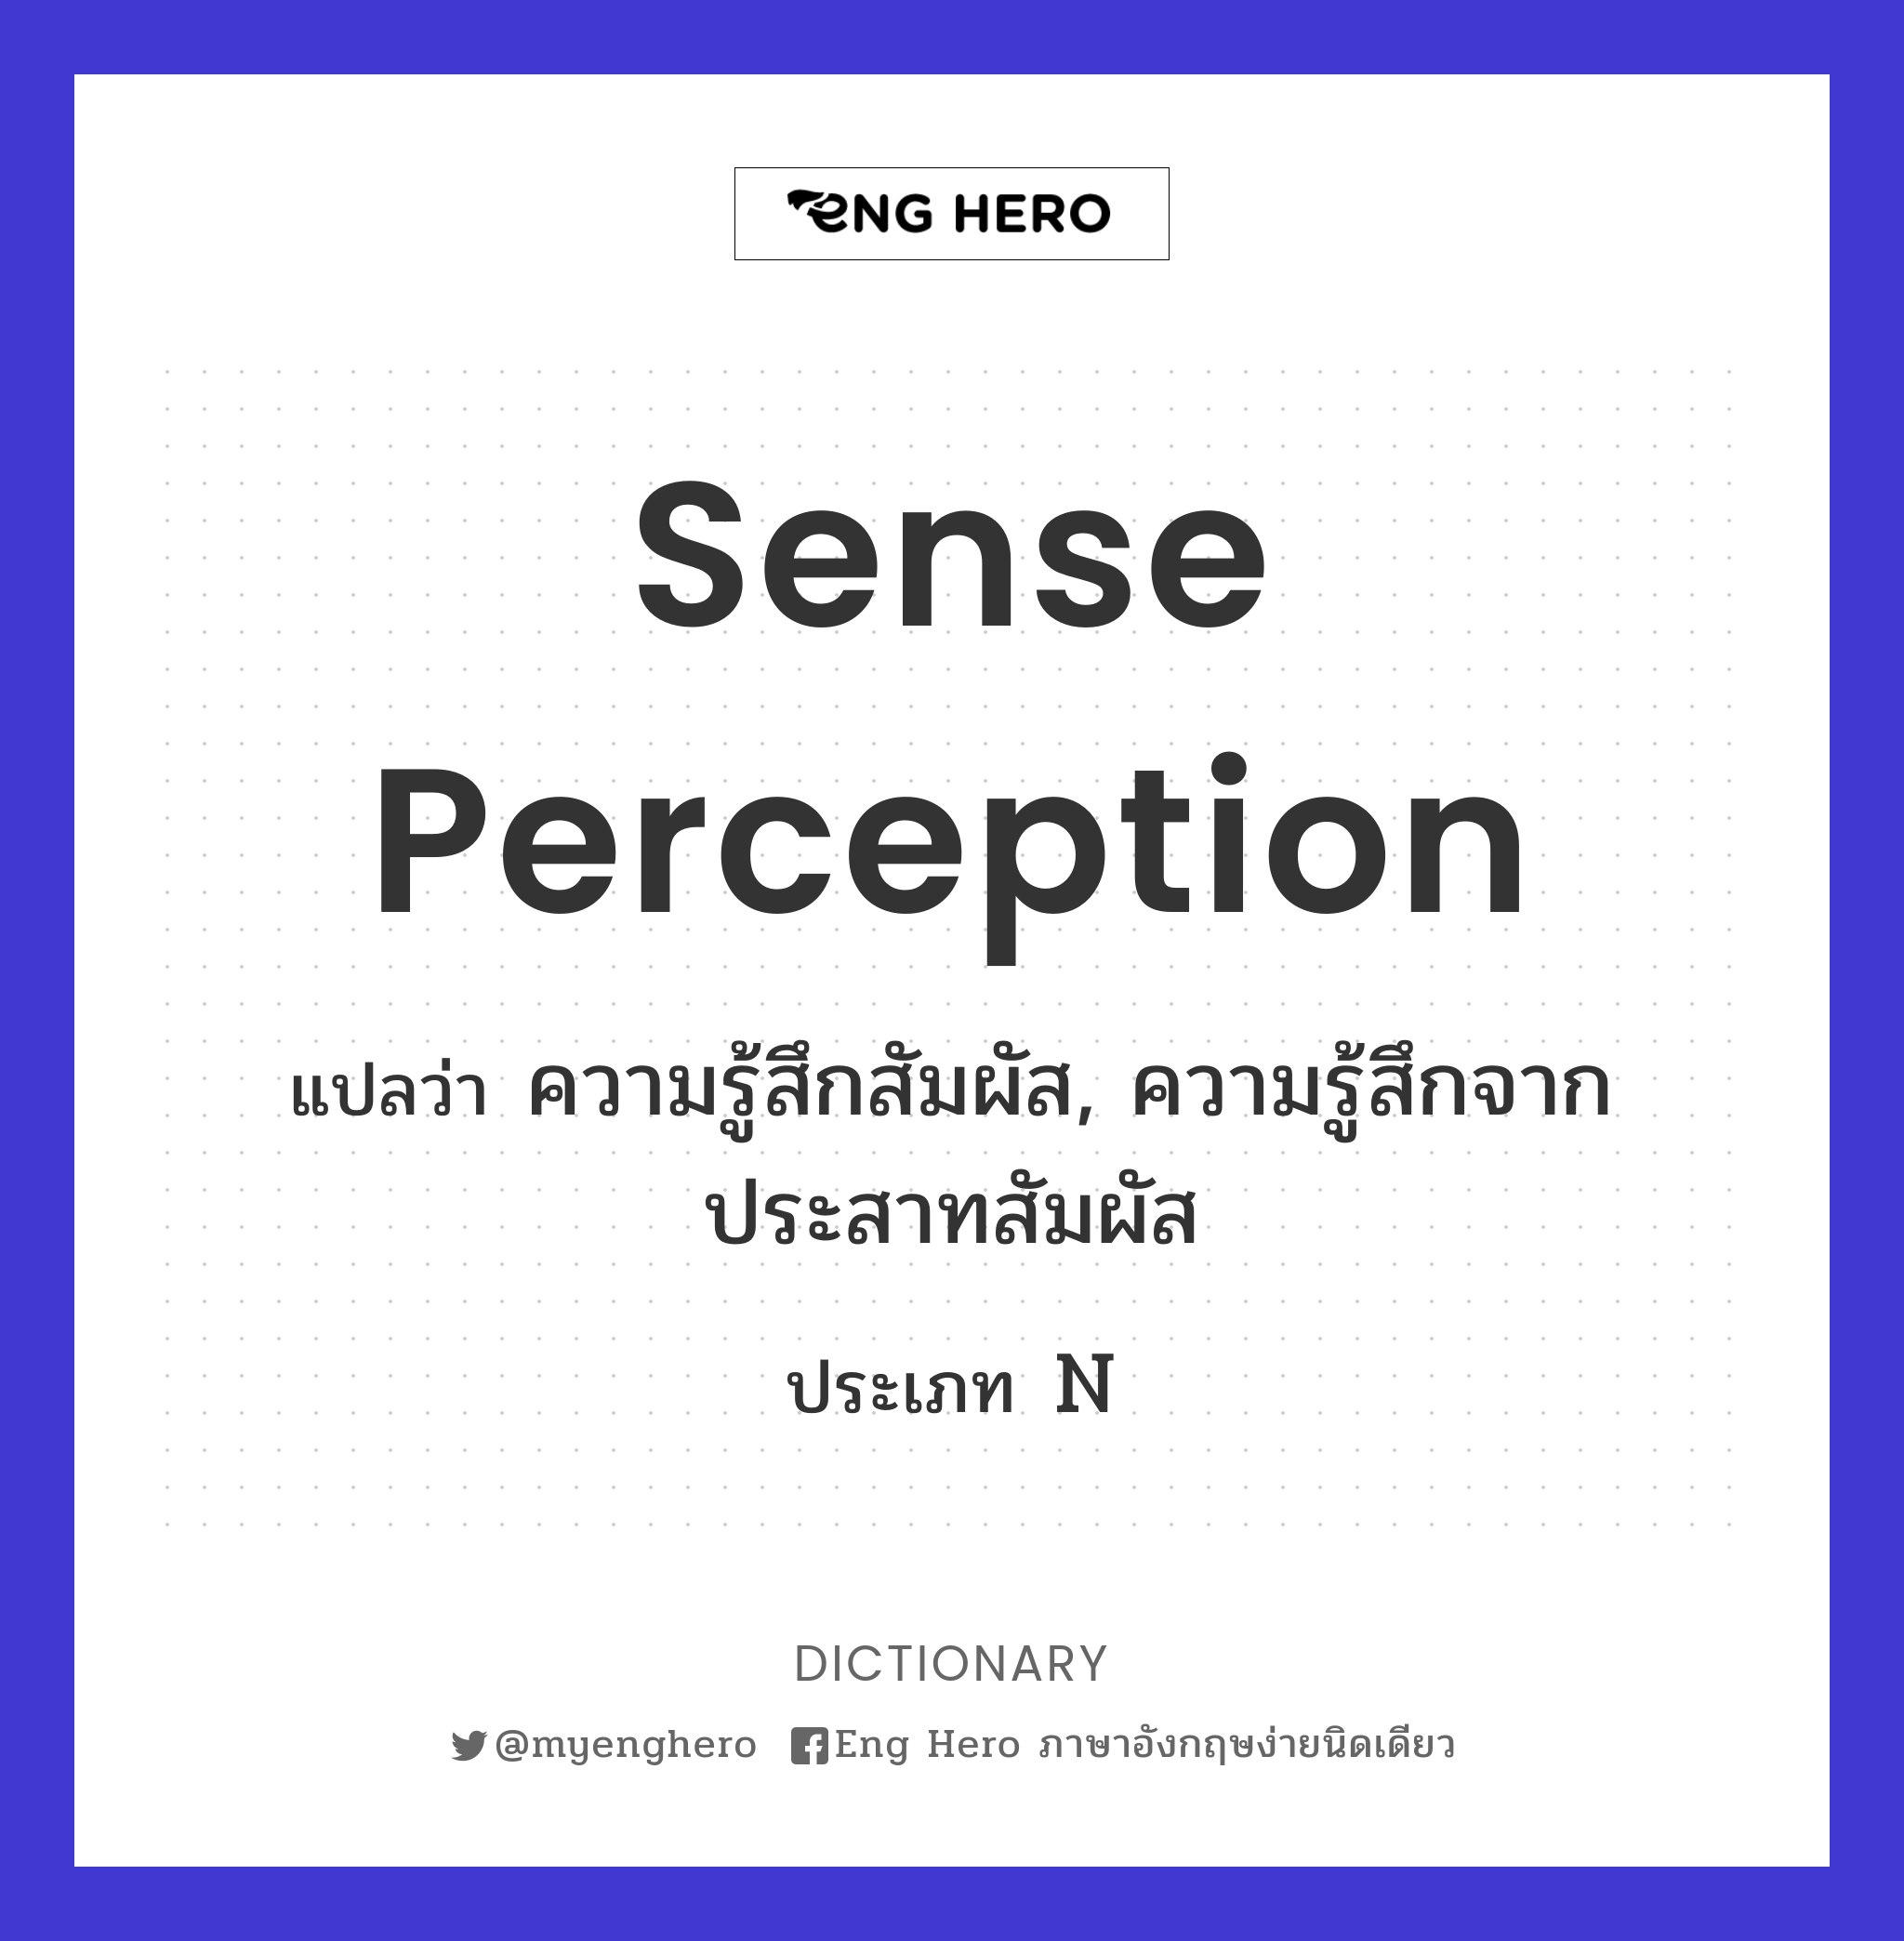 sense perception